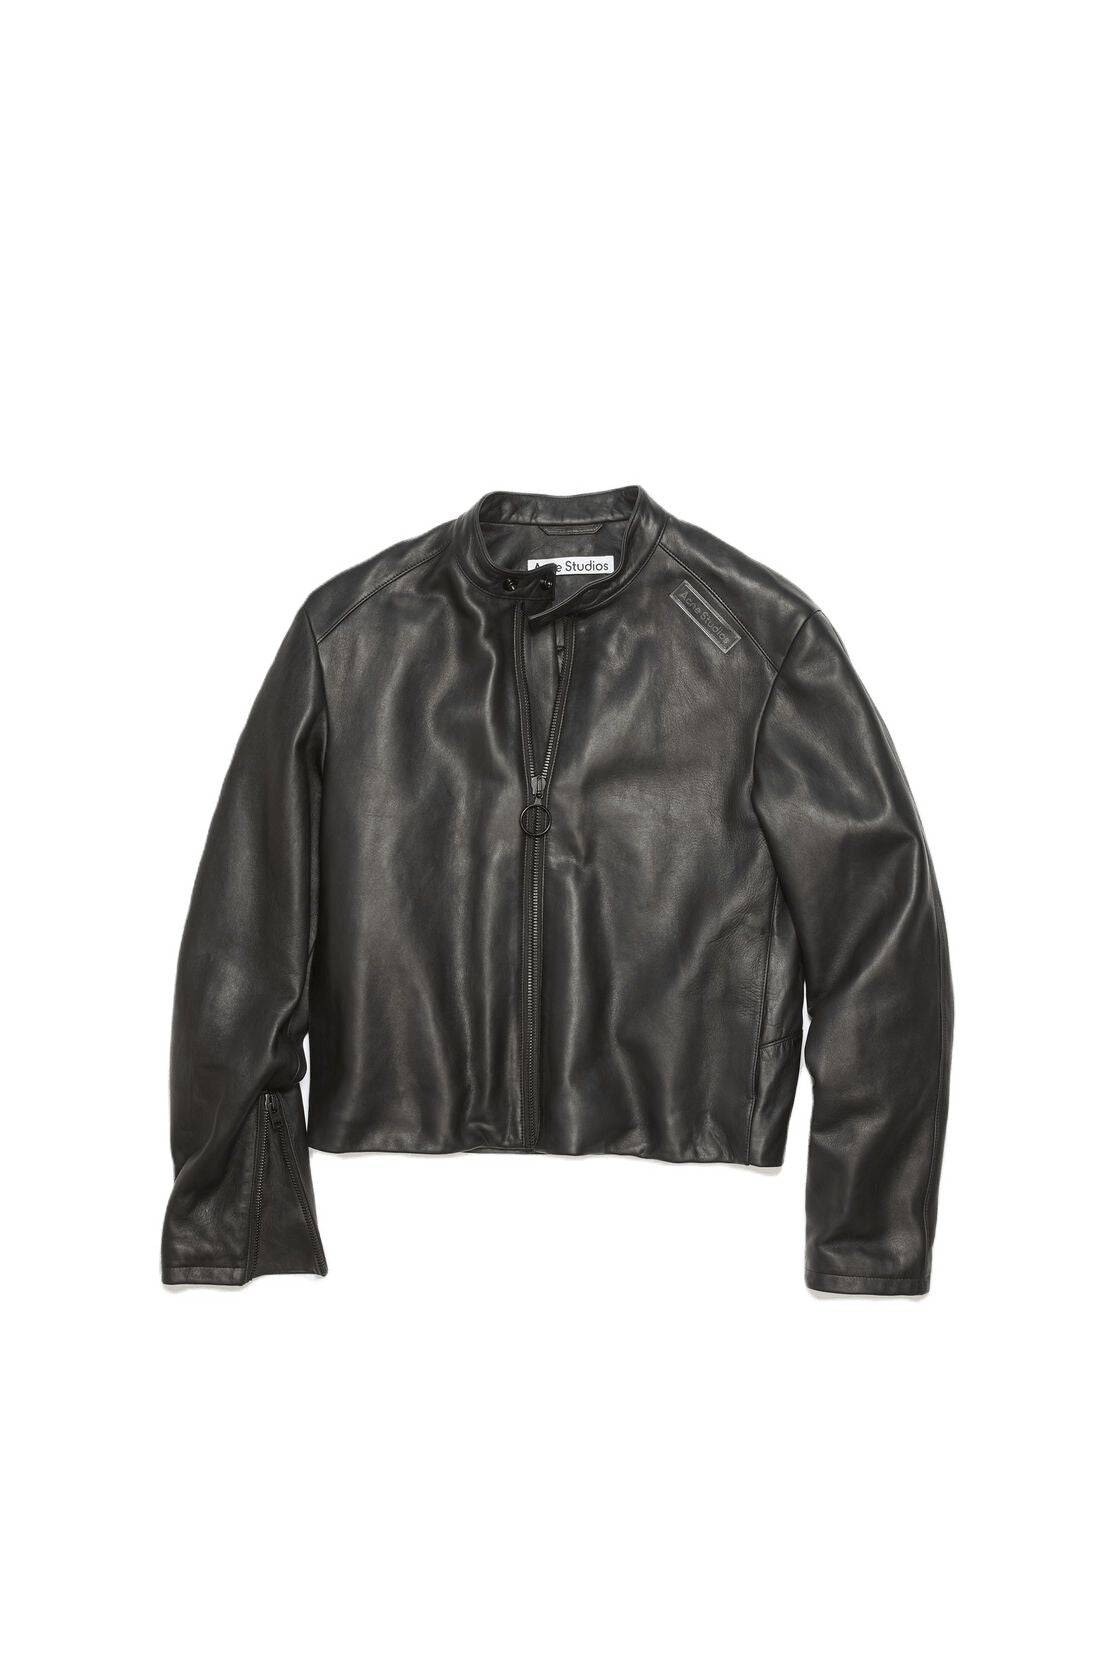 Acne Studios Classic Black Leather Jacket For Men